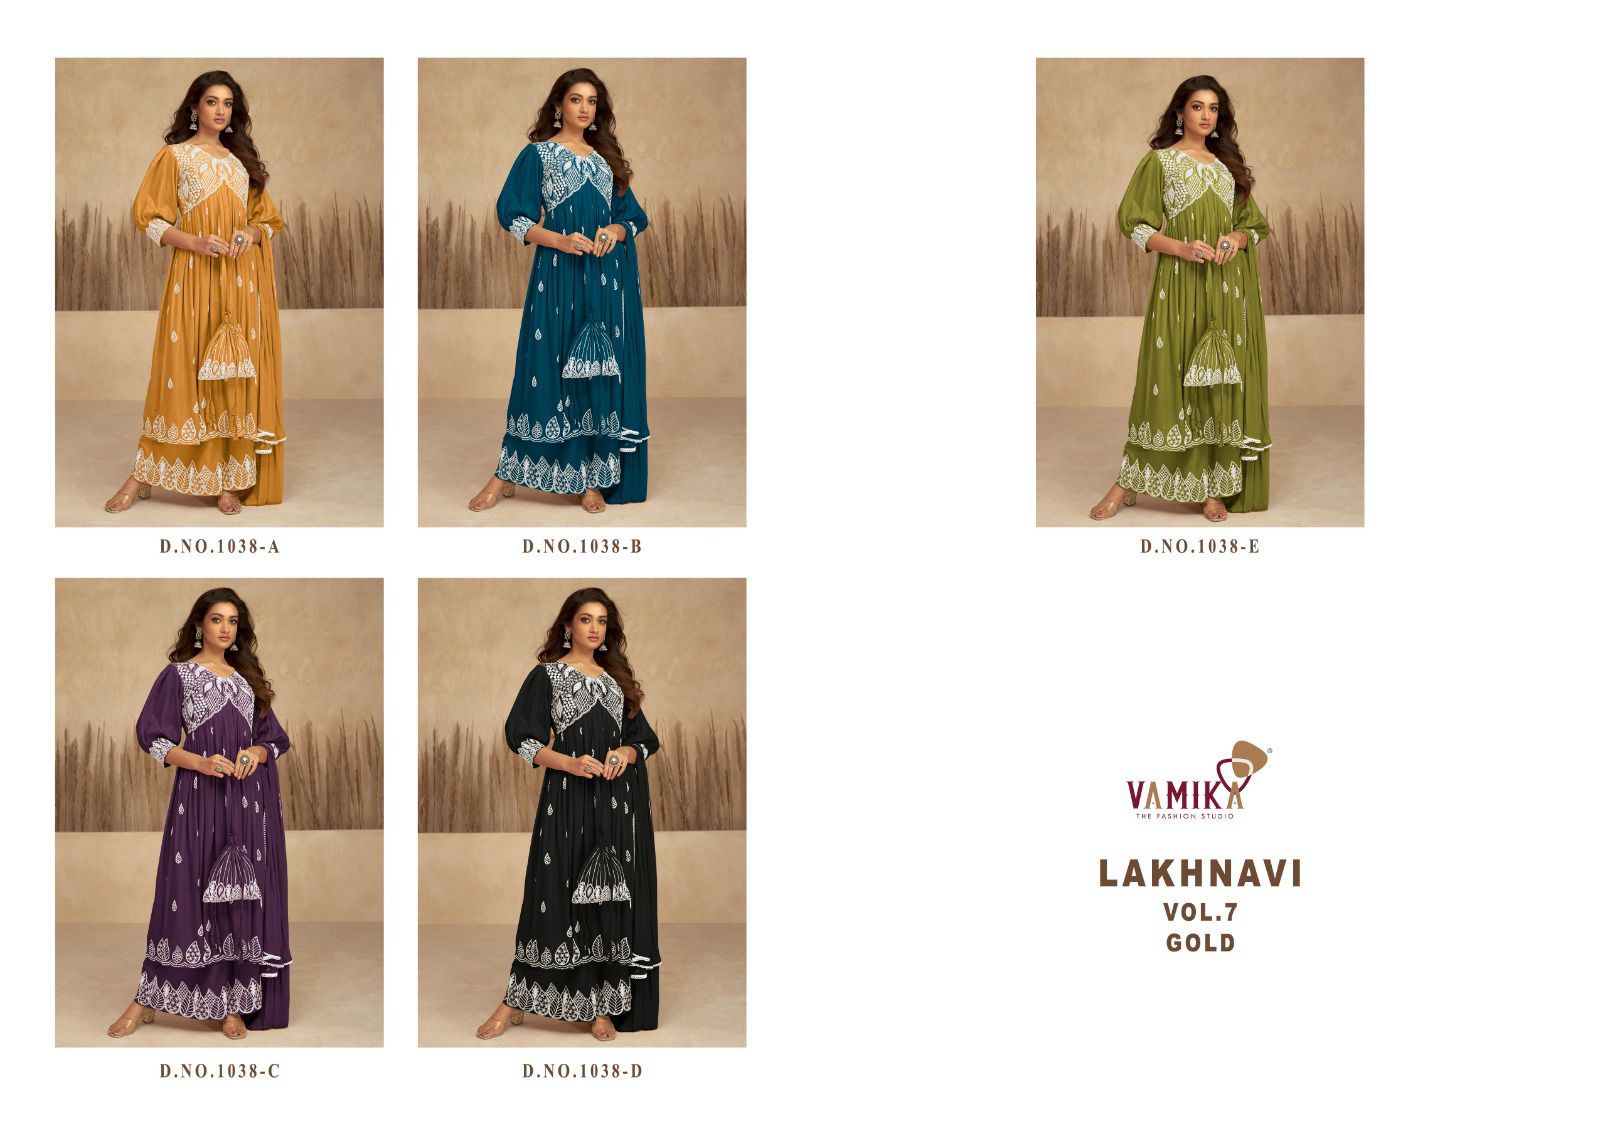 Vamika Lakhnavi Vol 7 Gold New Color collection 6